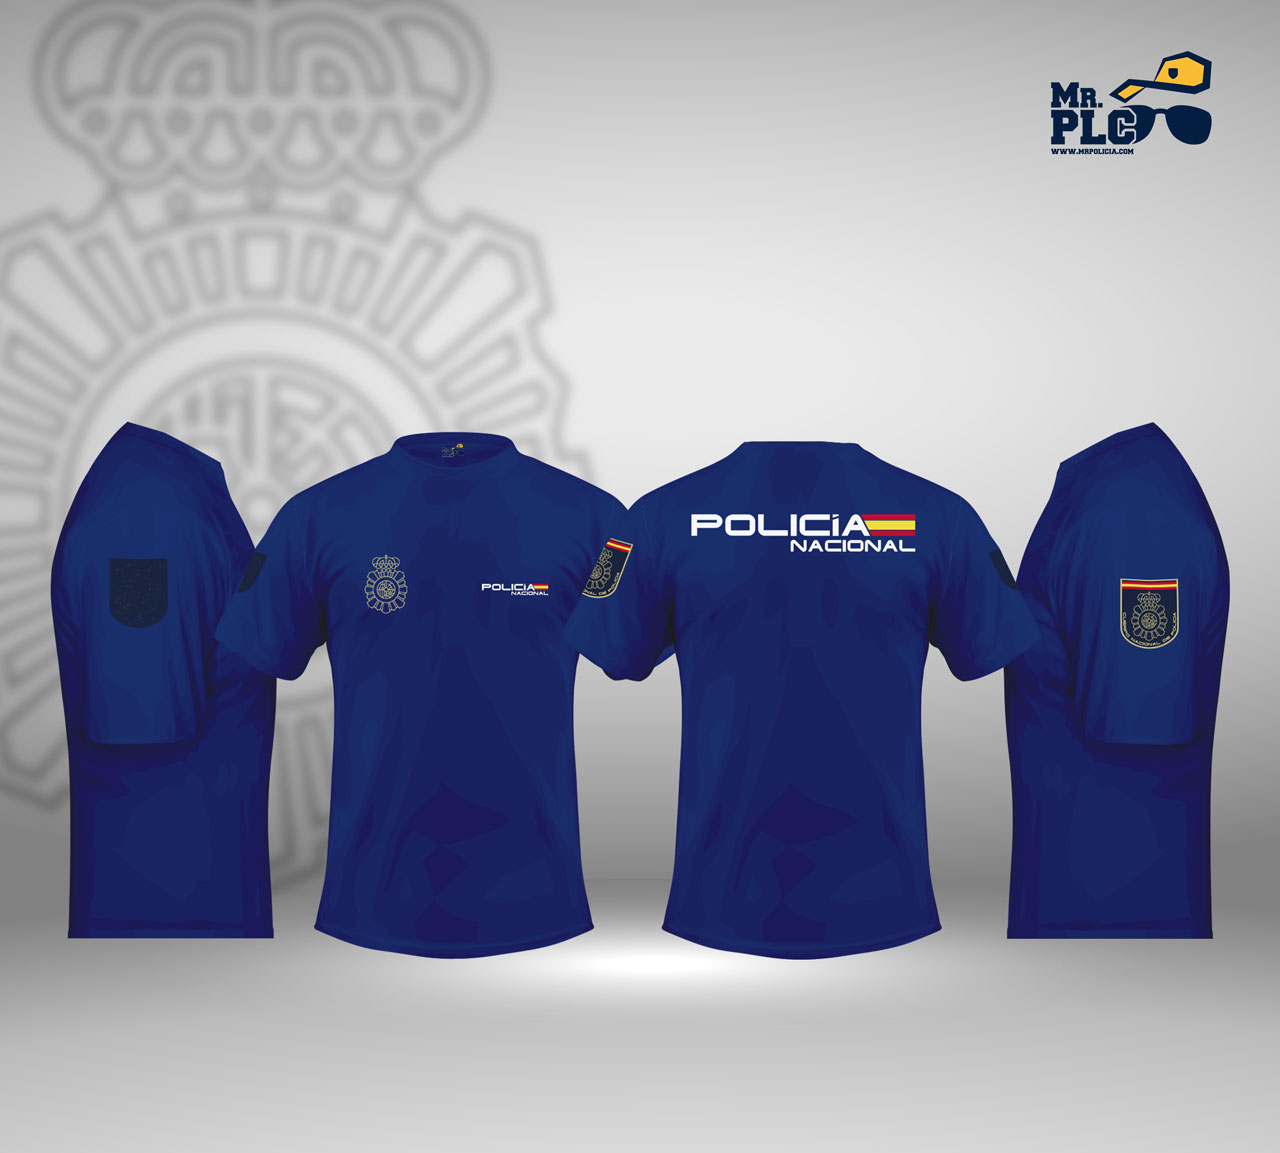 https://mrpolicia.com/wp-content/uploads/2020/09/mockup-camiseta-policia-nacional.jpg